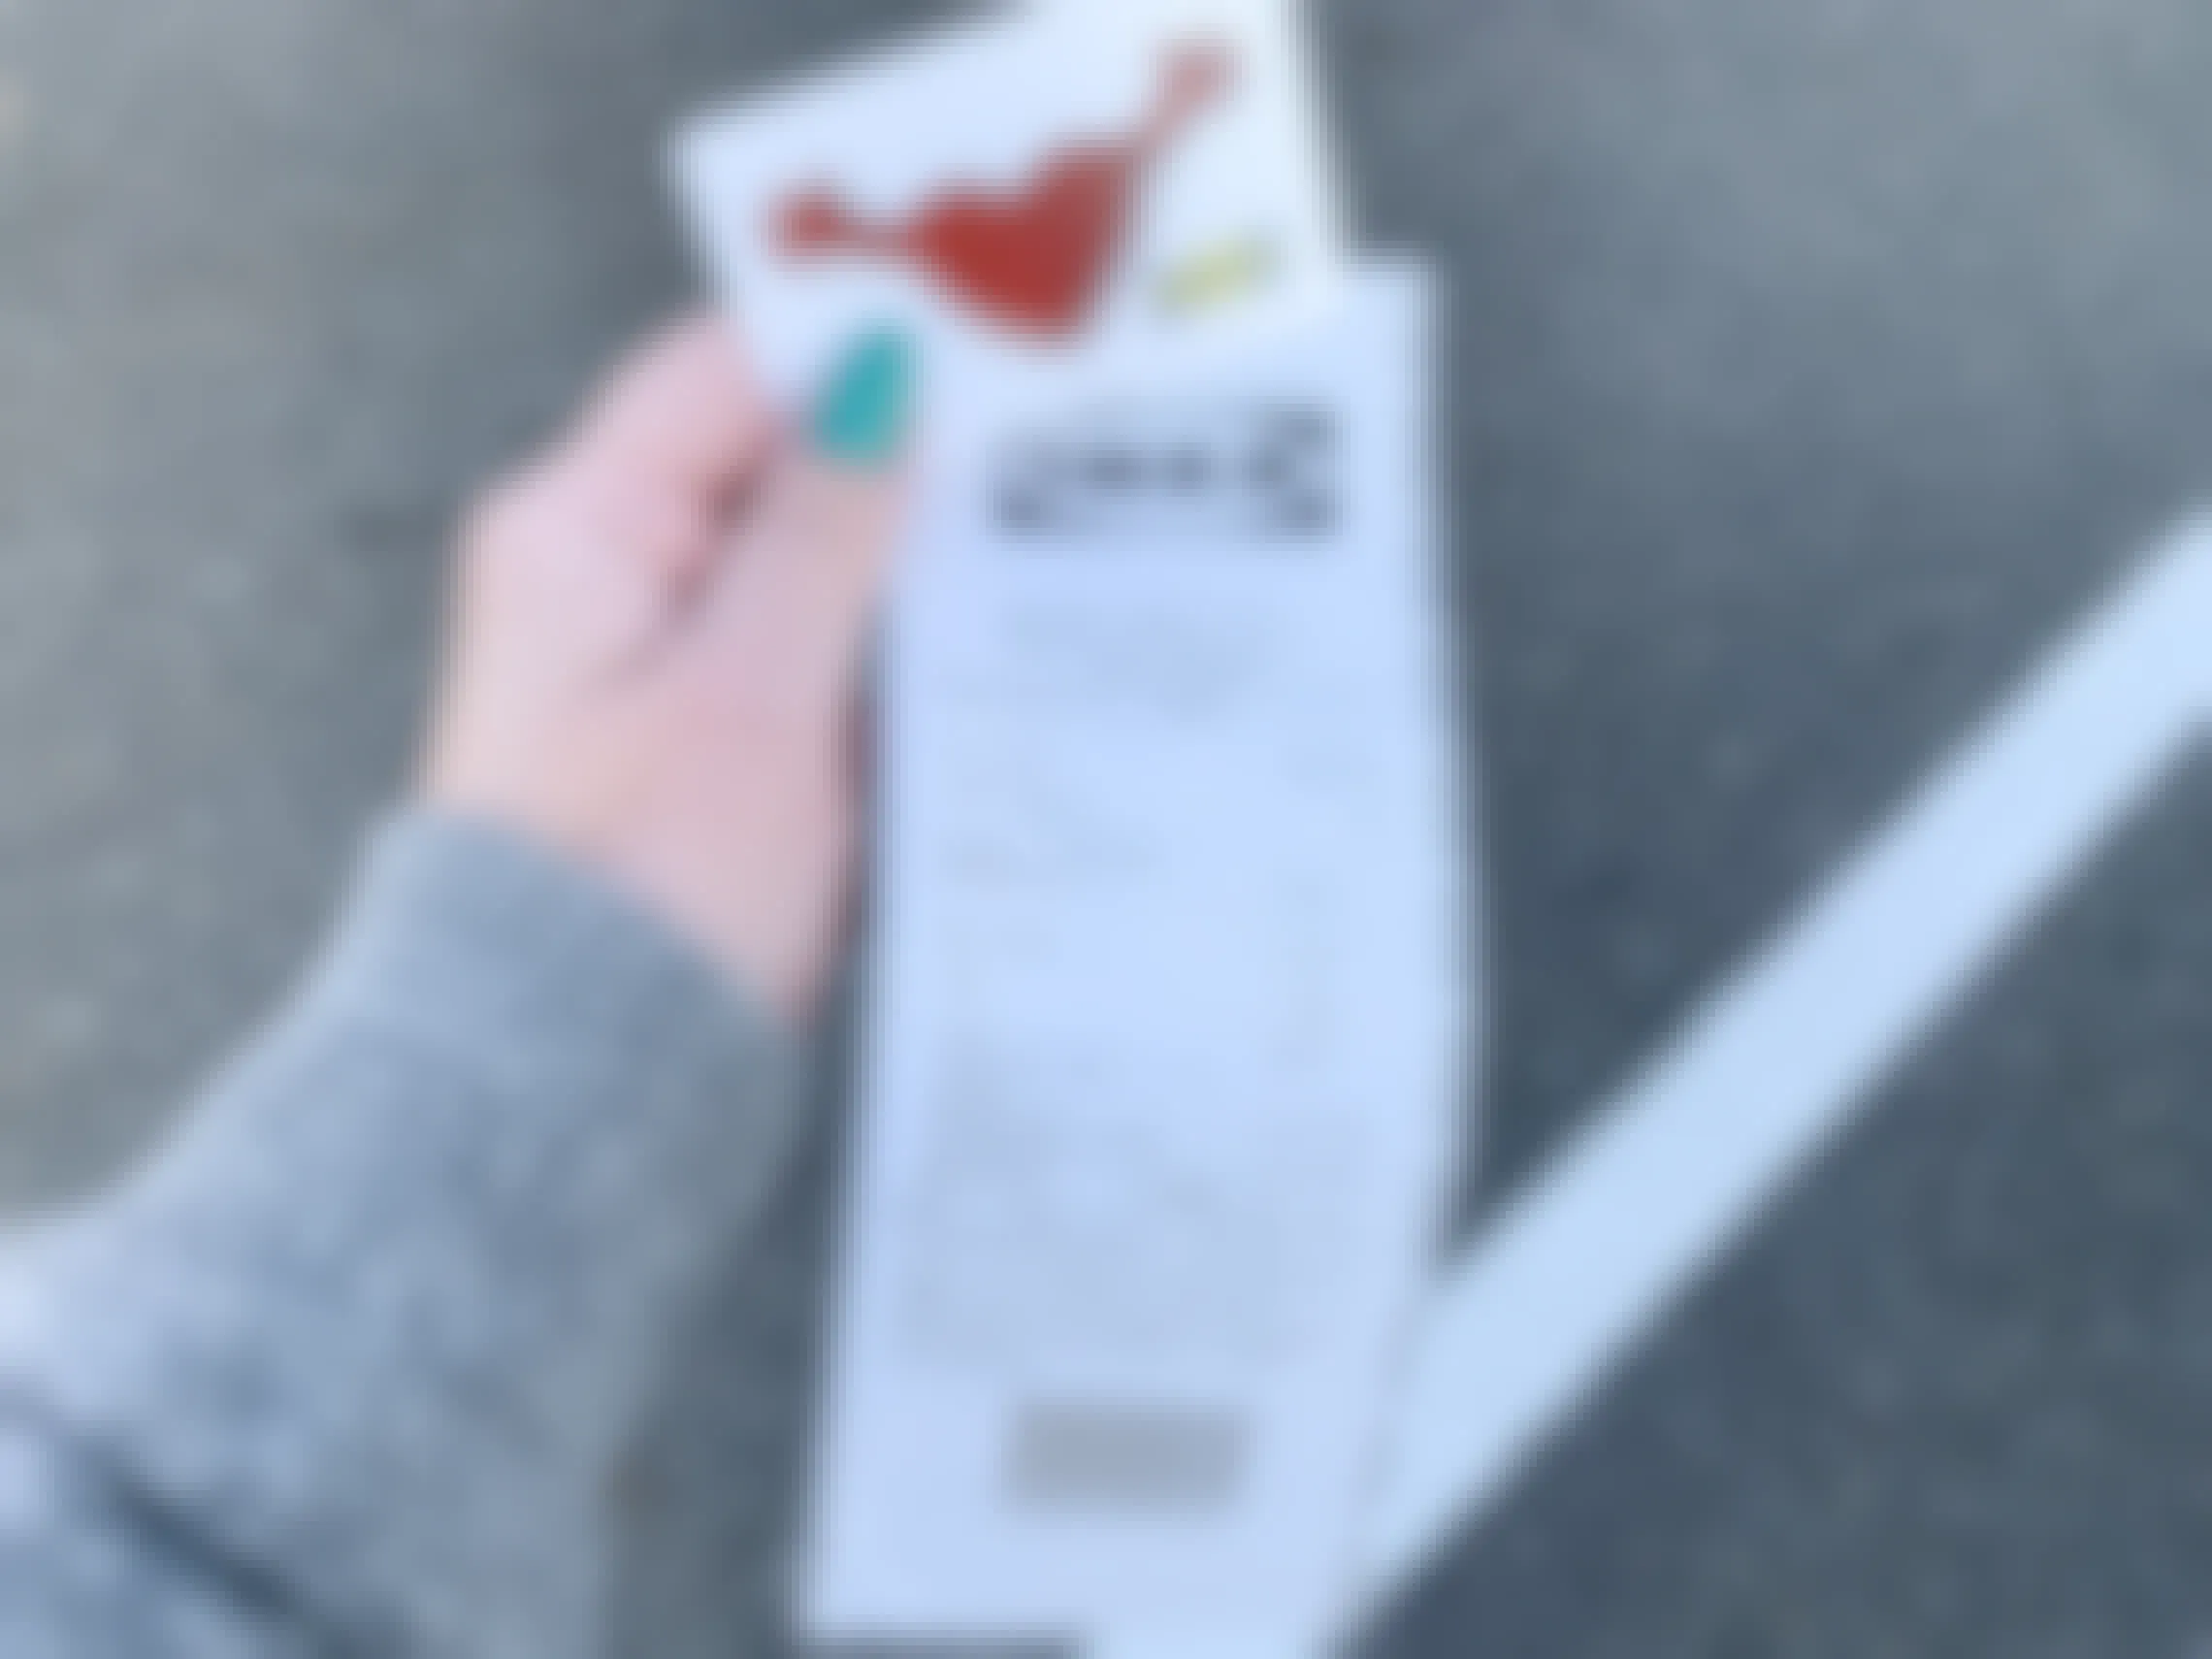 Ikea gift card and return receipt